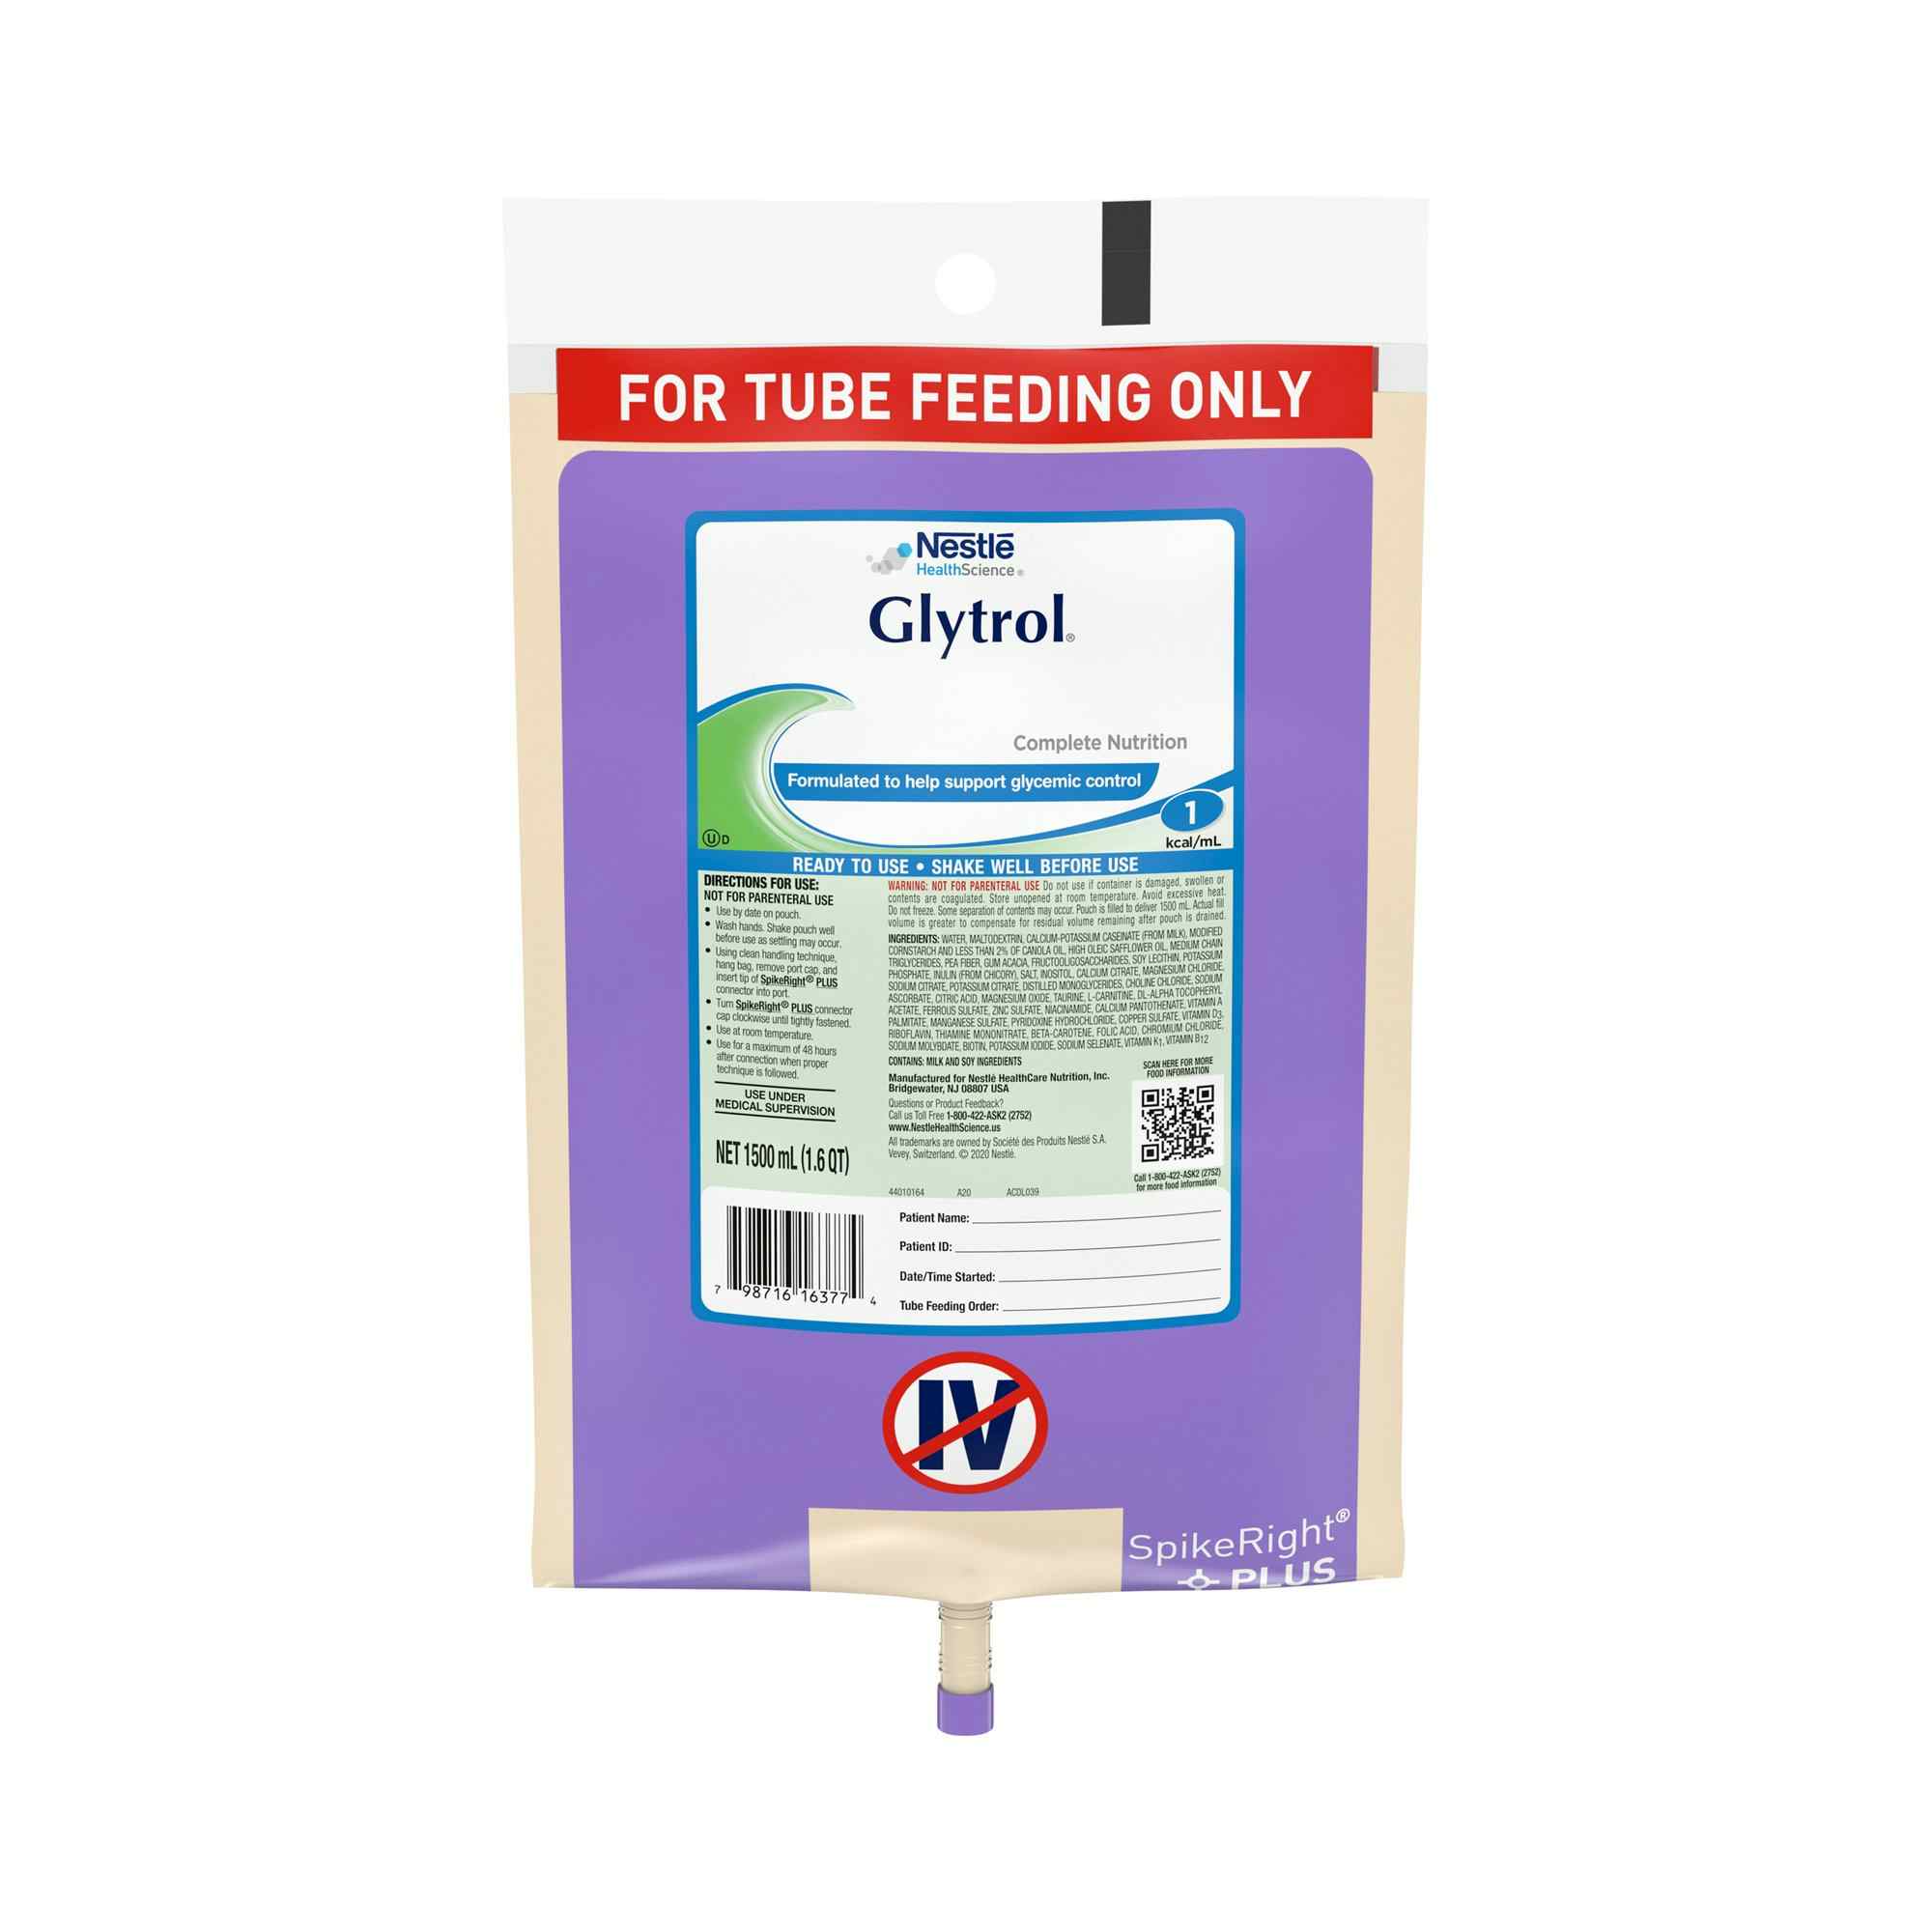 Nestle HealthScience Glytrol Complete Nutrition Tube Feeding Formula, 9871632391, 50.7 oz. - Case of 4